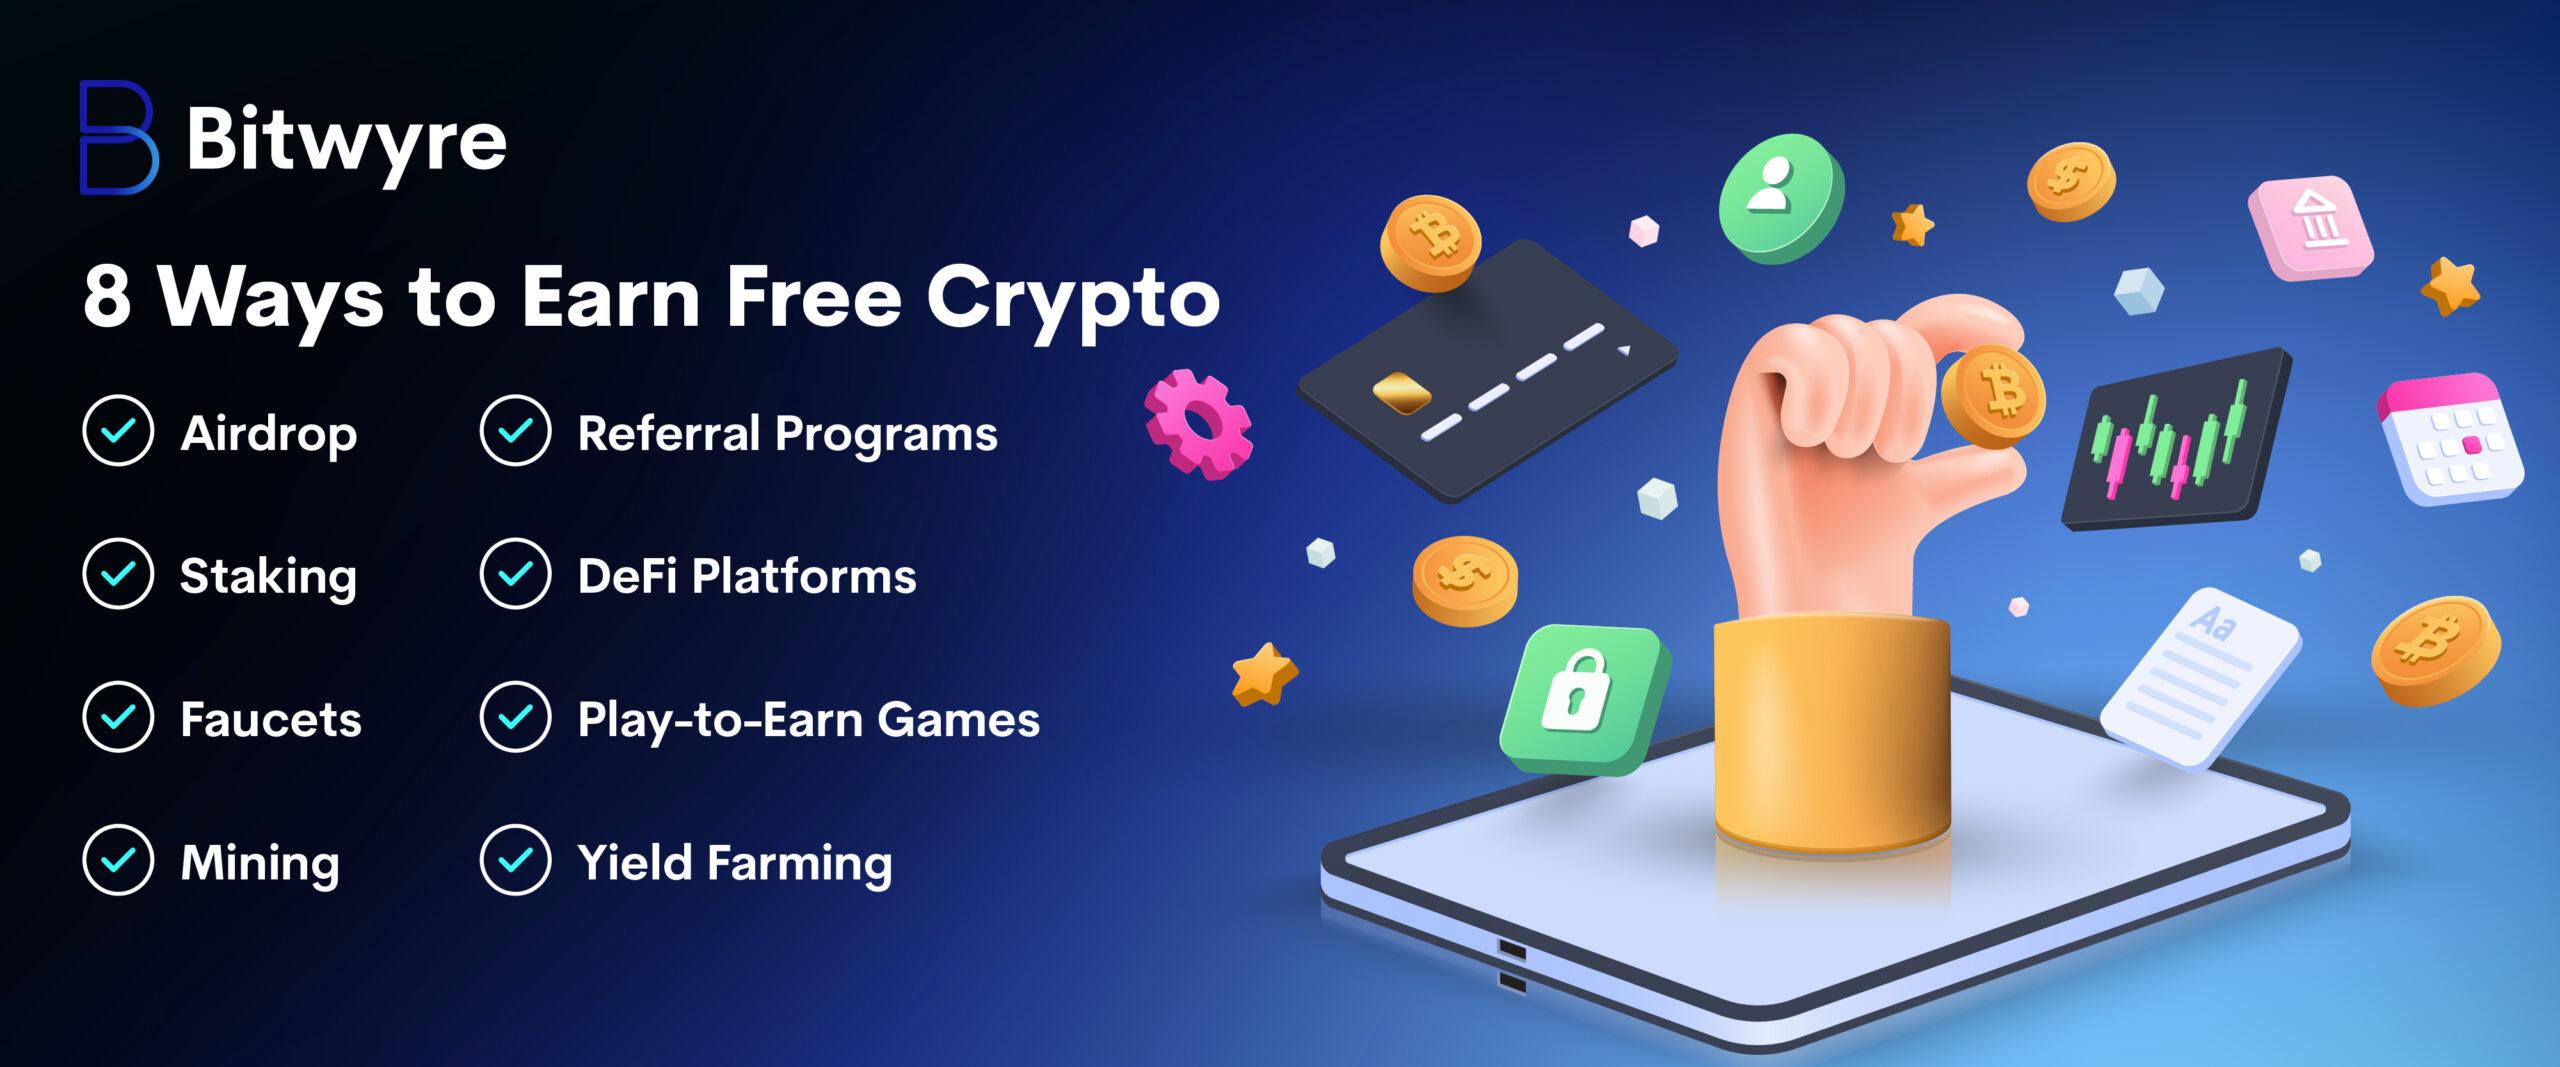 8 Ways to Earn Free Crypto